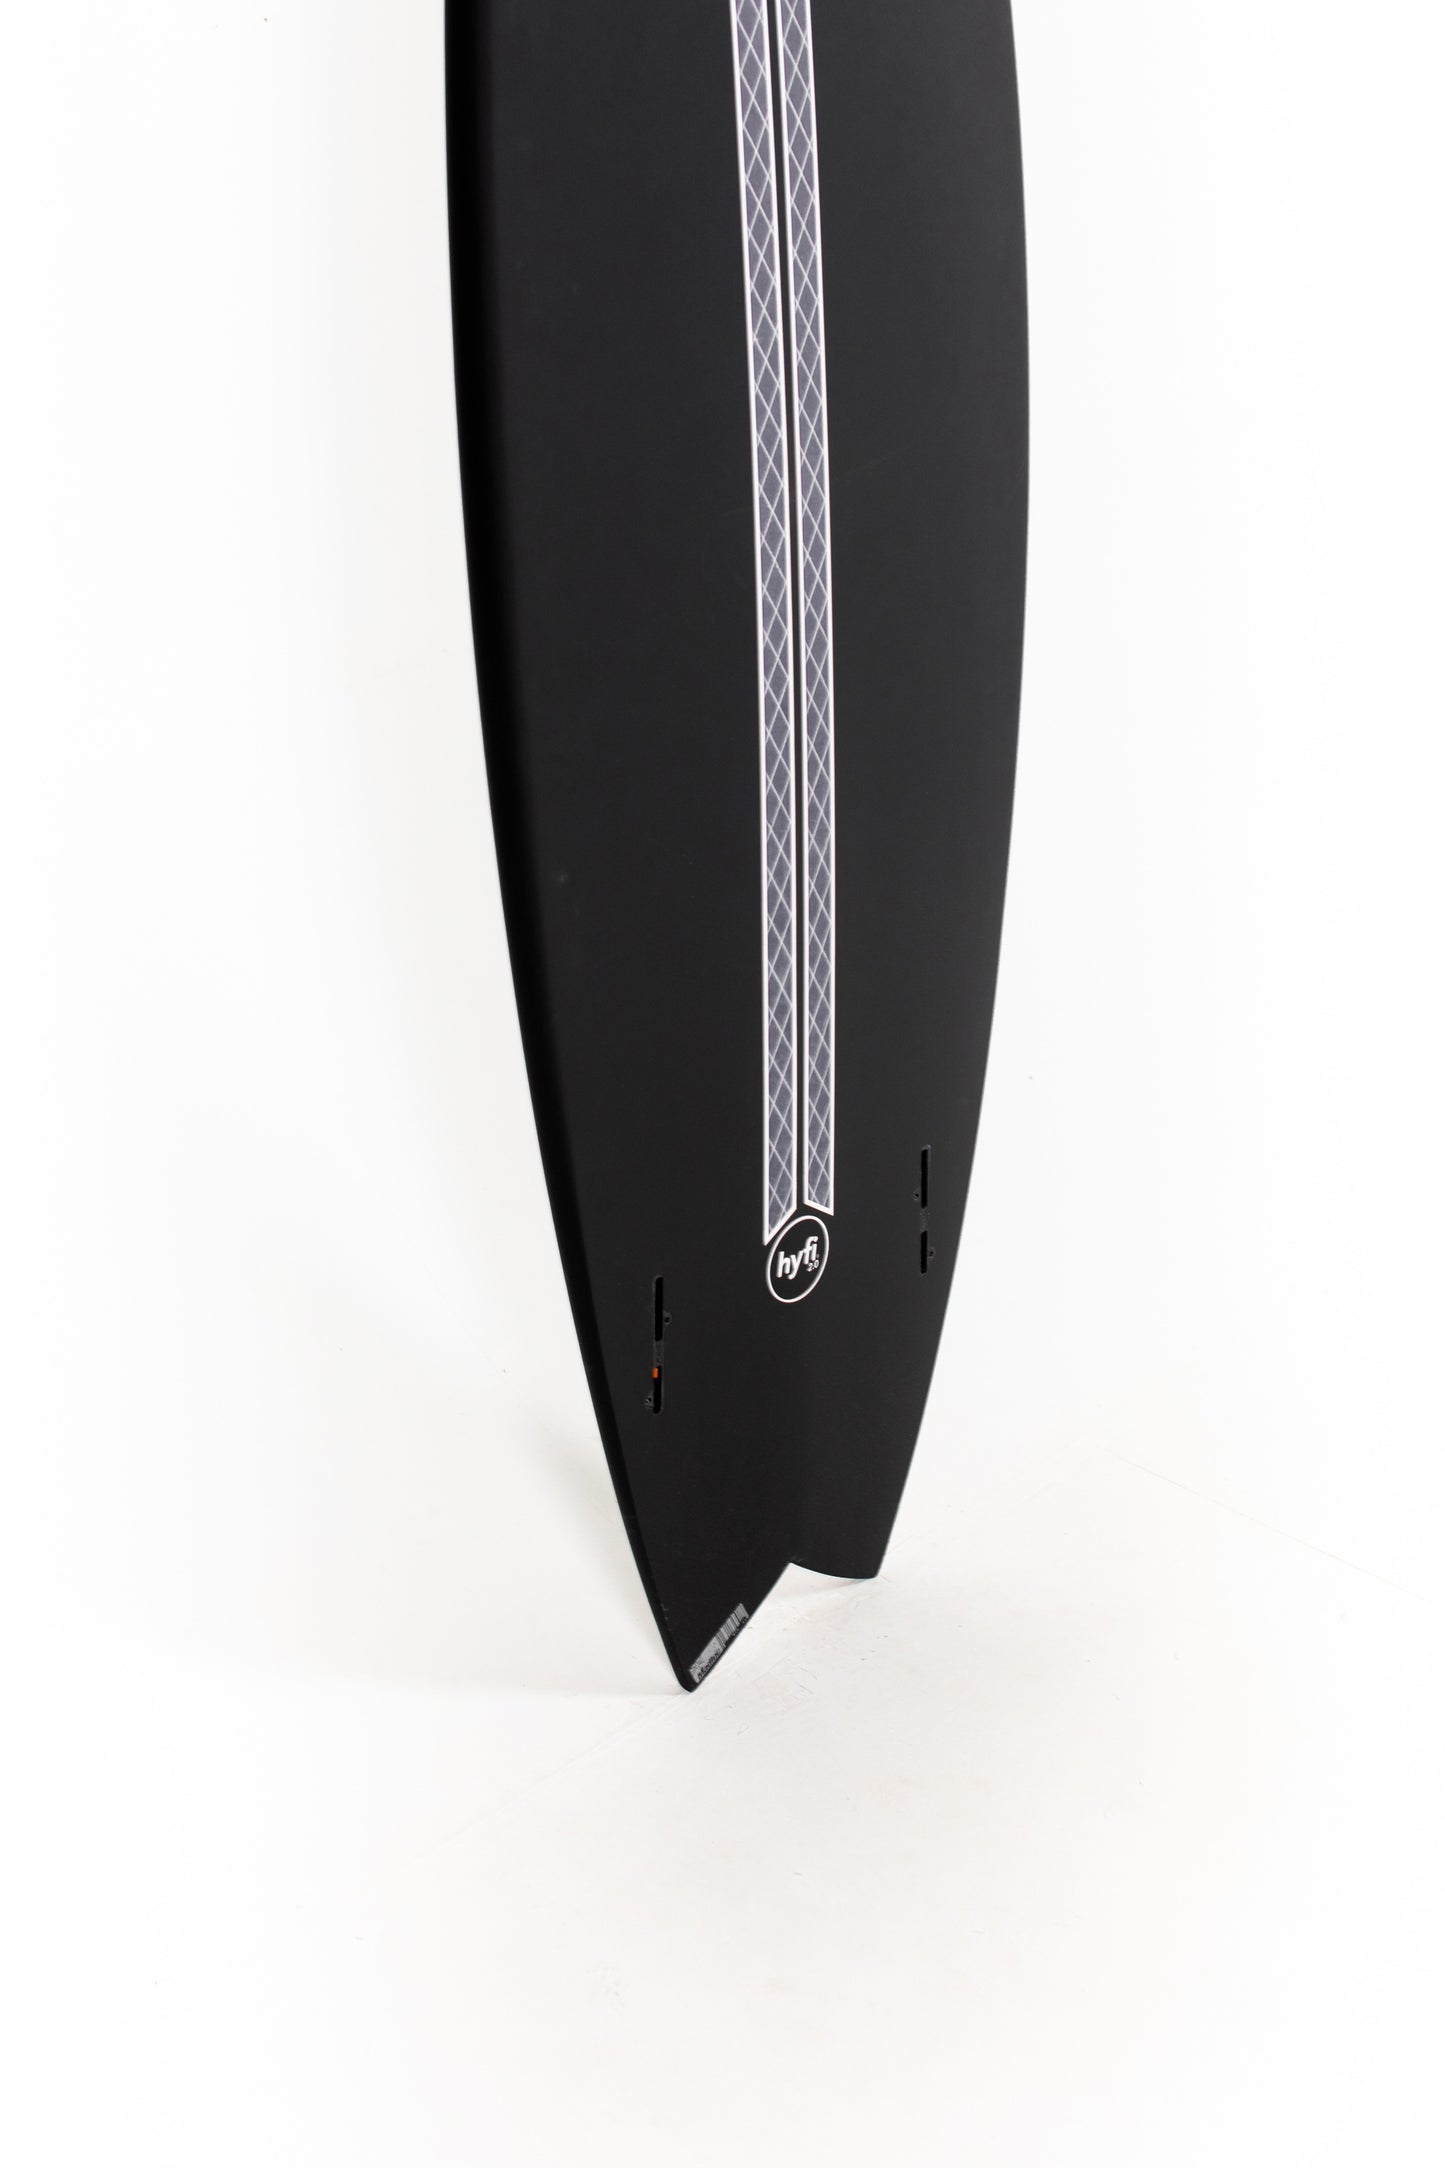 
                  
                    Pukas Surf Shop - JS Surfboards - BLACK BARON HYFI - 5'8" x 20 1/4 x 2 1/2 x 31,7L - BLACKBHYFI508
                  
                